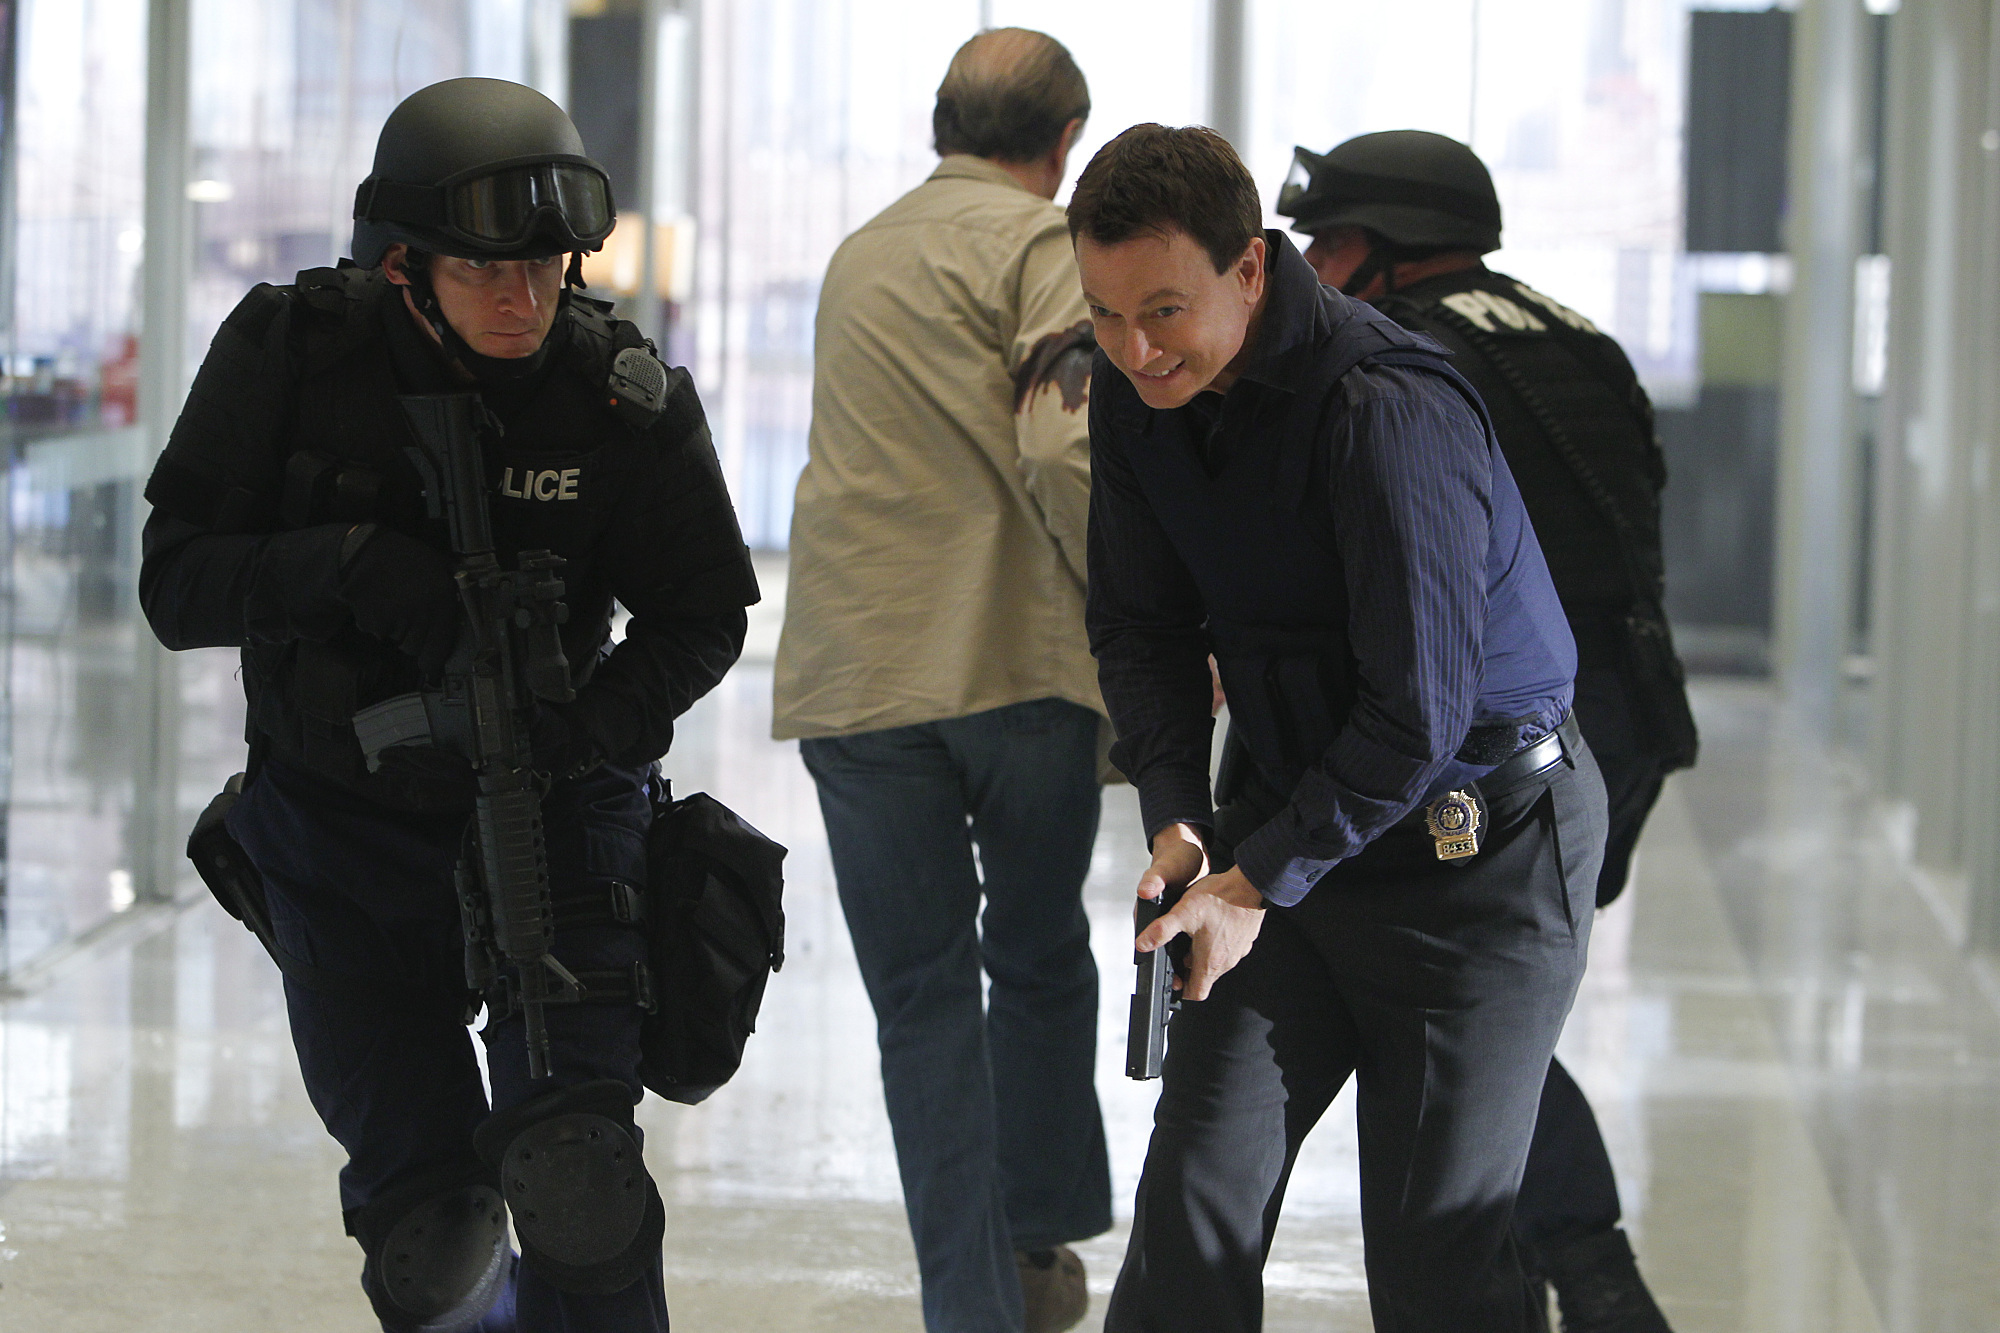 Still of Gary Sinise in CSI Niujorkas (2004)